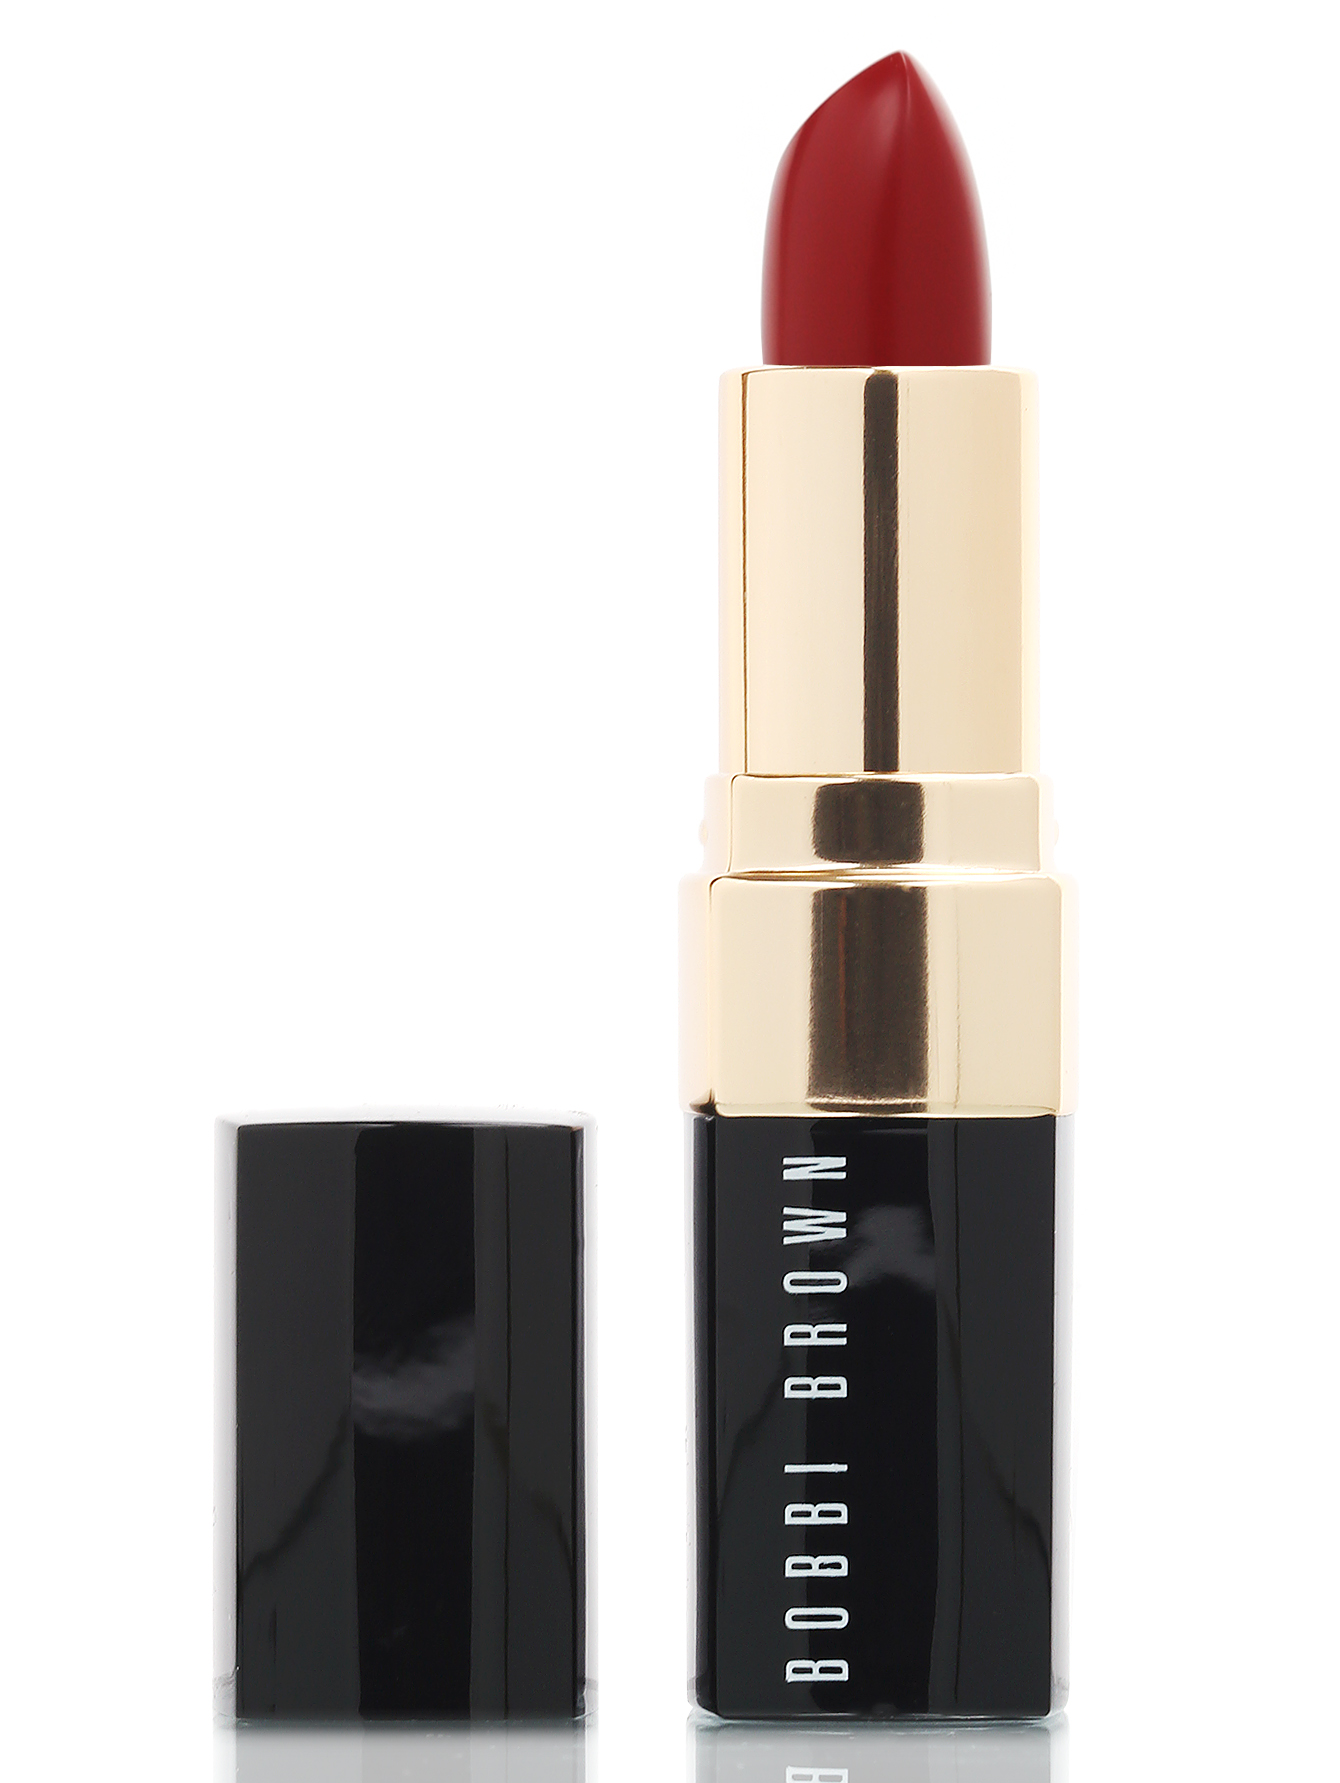  Помада для губ - Red, Lipstick - Общий вид